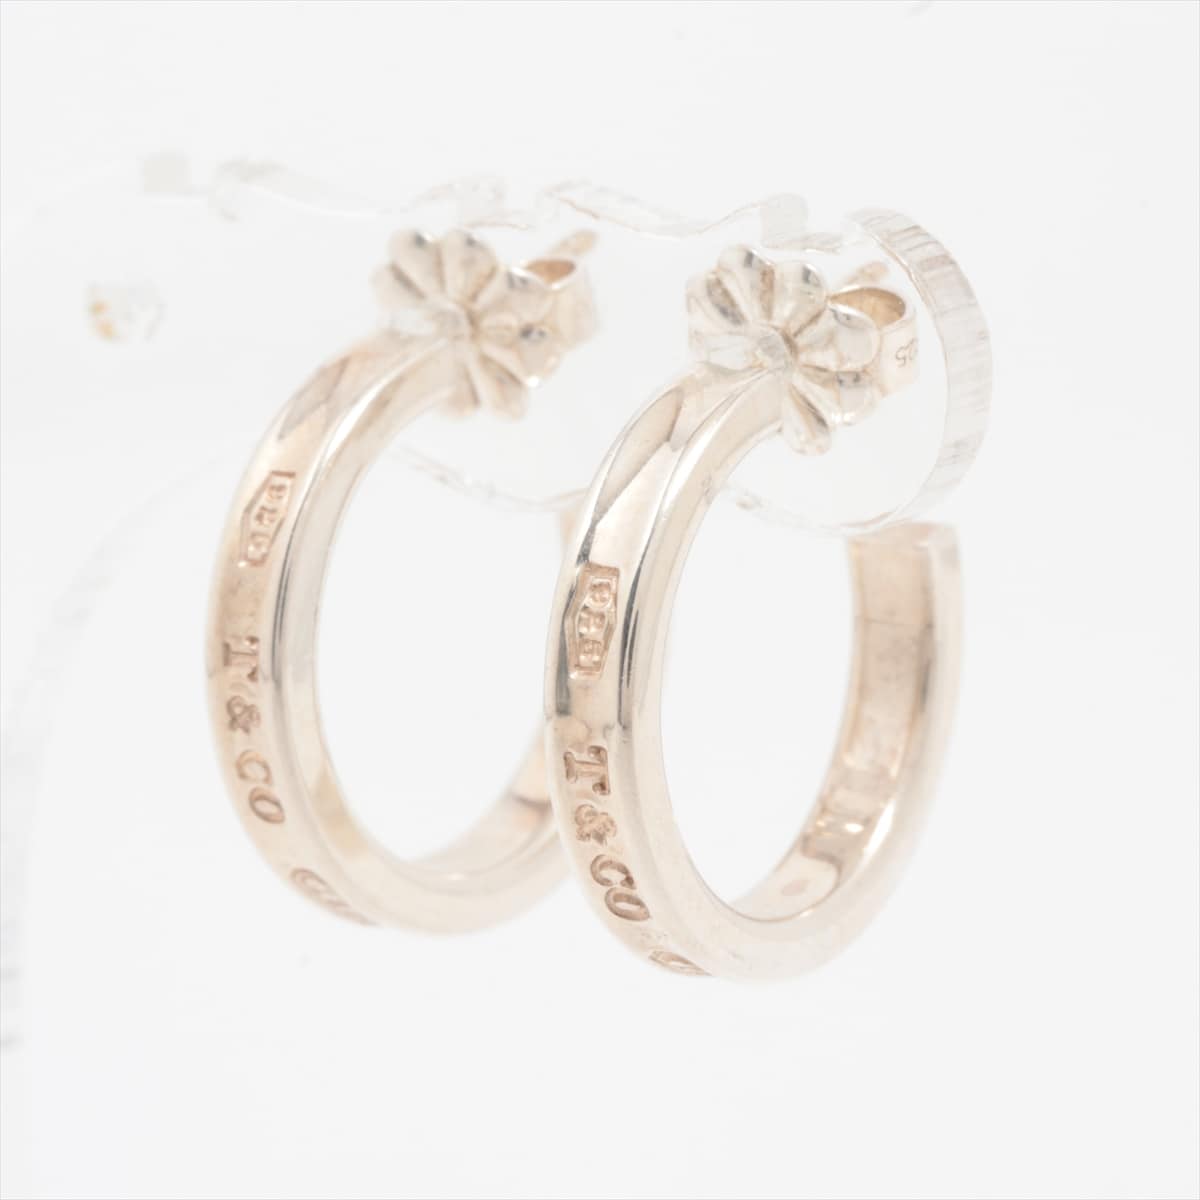 Tiffany 1837 Hoop Piercing jewelry (for both ears) 925 4.3g Silver